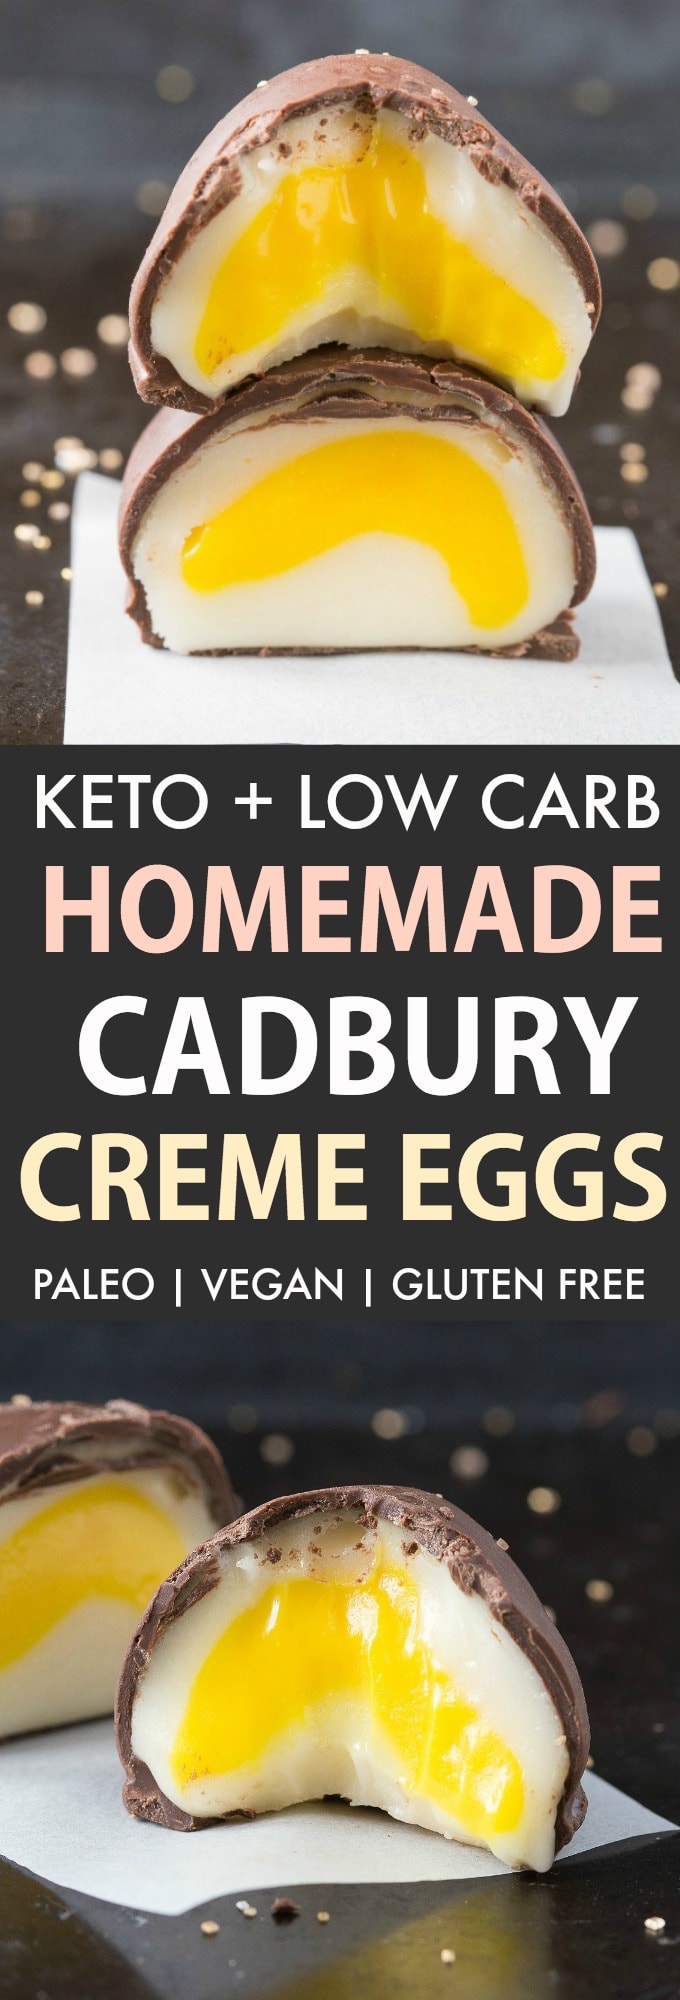 Homemade Vegan and Keto Cadbury Creme Eggs 